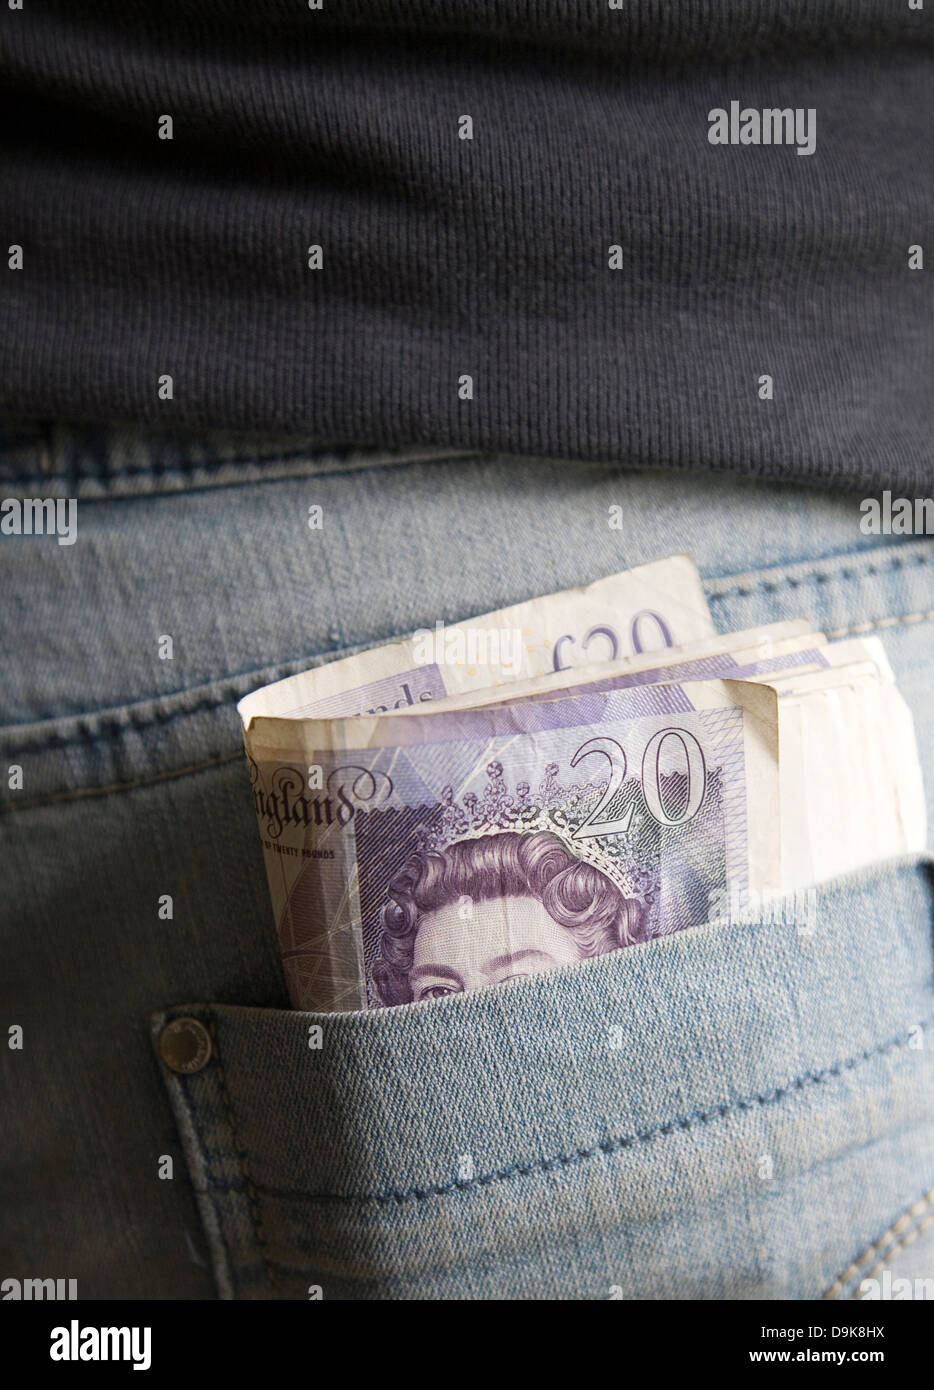 Roll of twenty pound notes in back pocket of denim jeans Stock Photo